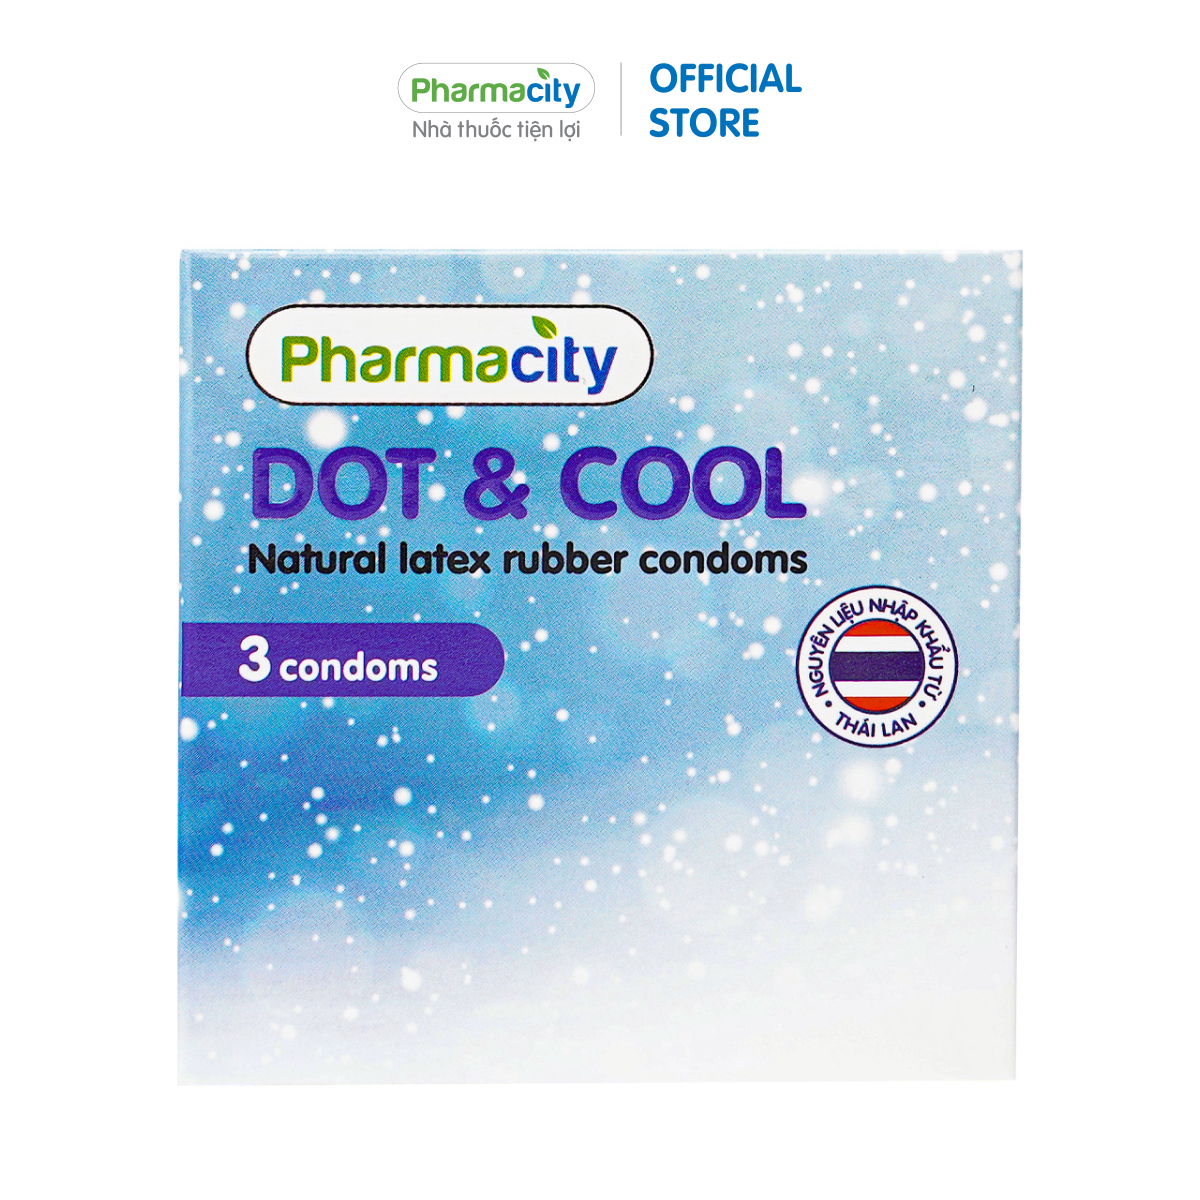 Bao cao su gai lạnh Pharmacity Dot & Cool (Hộp 3 cái)